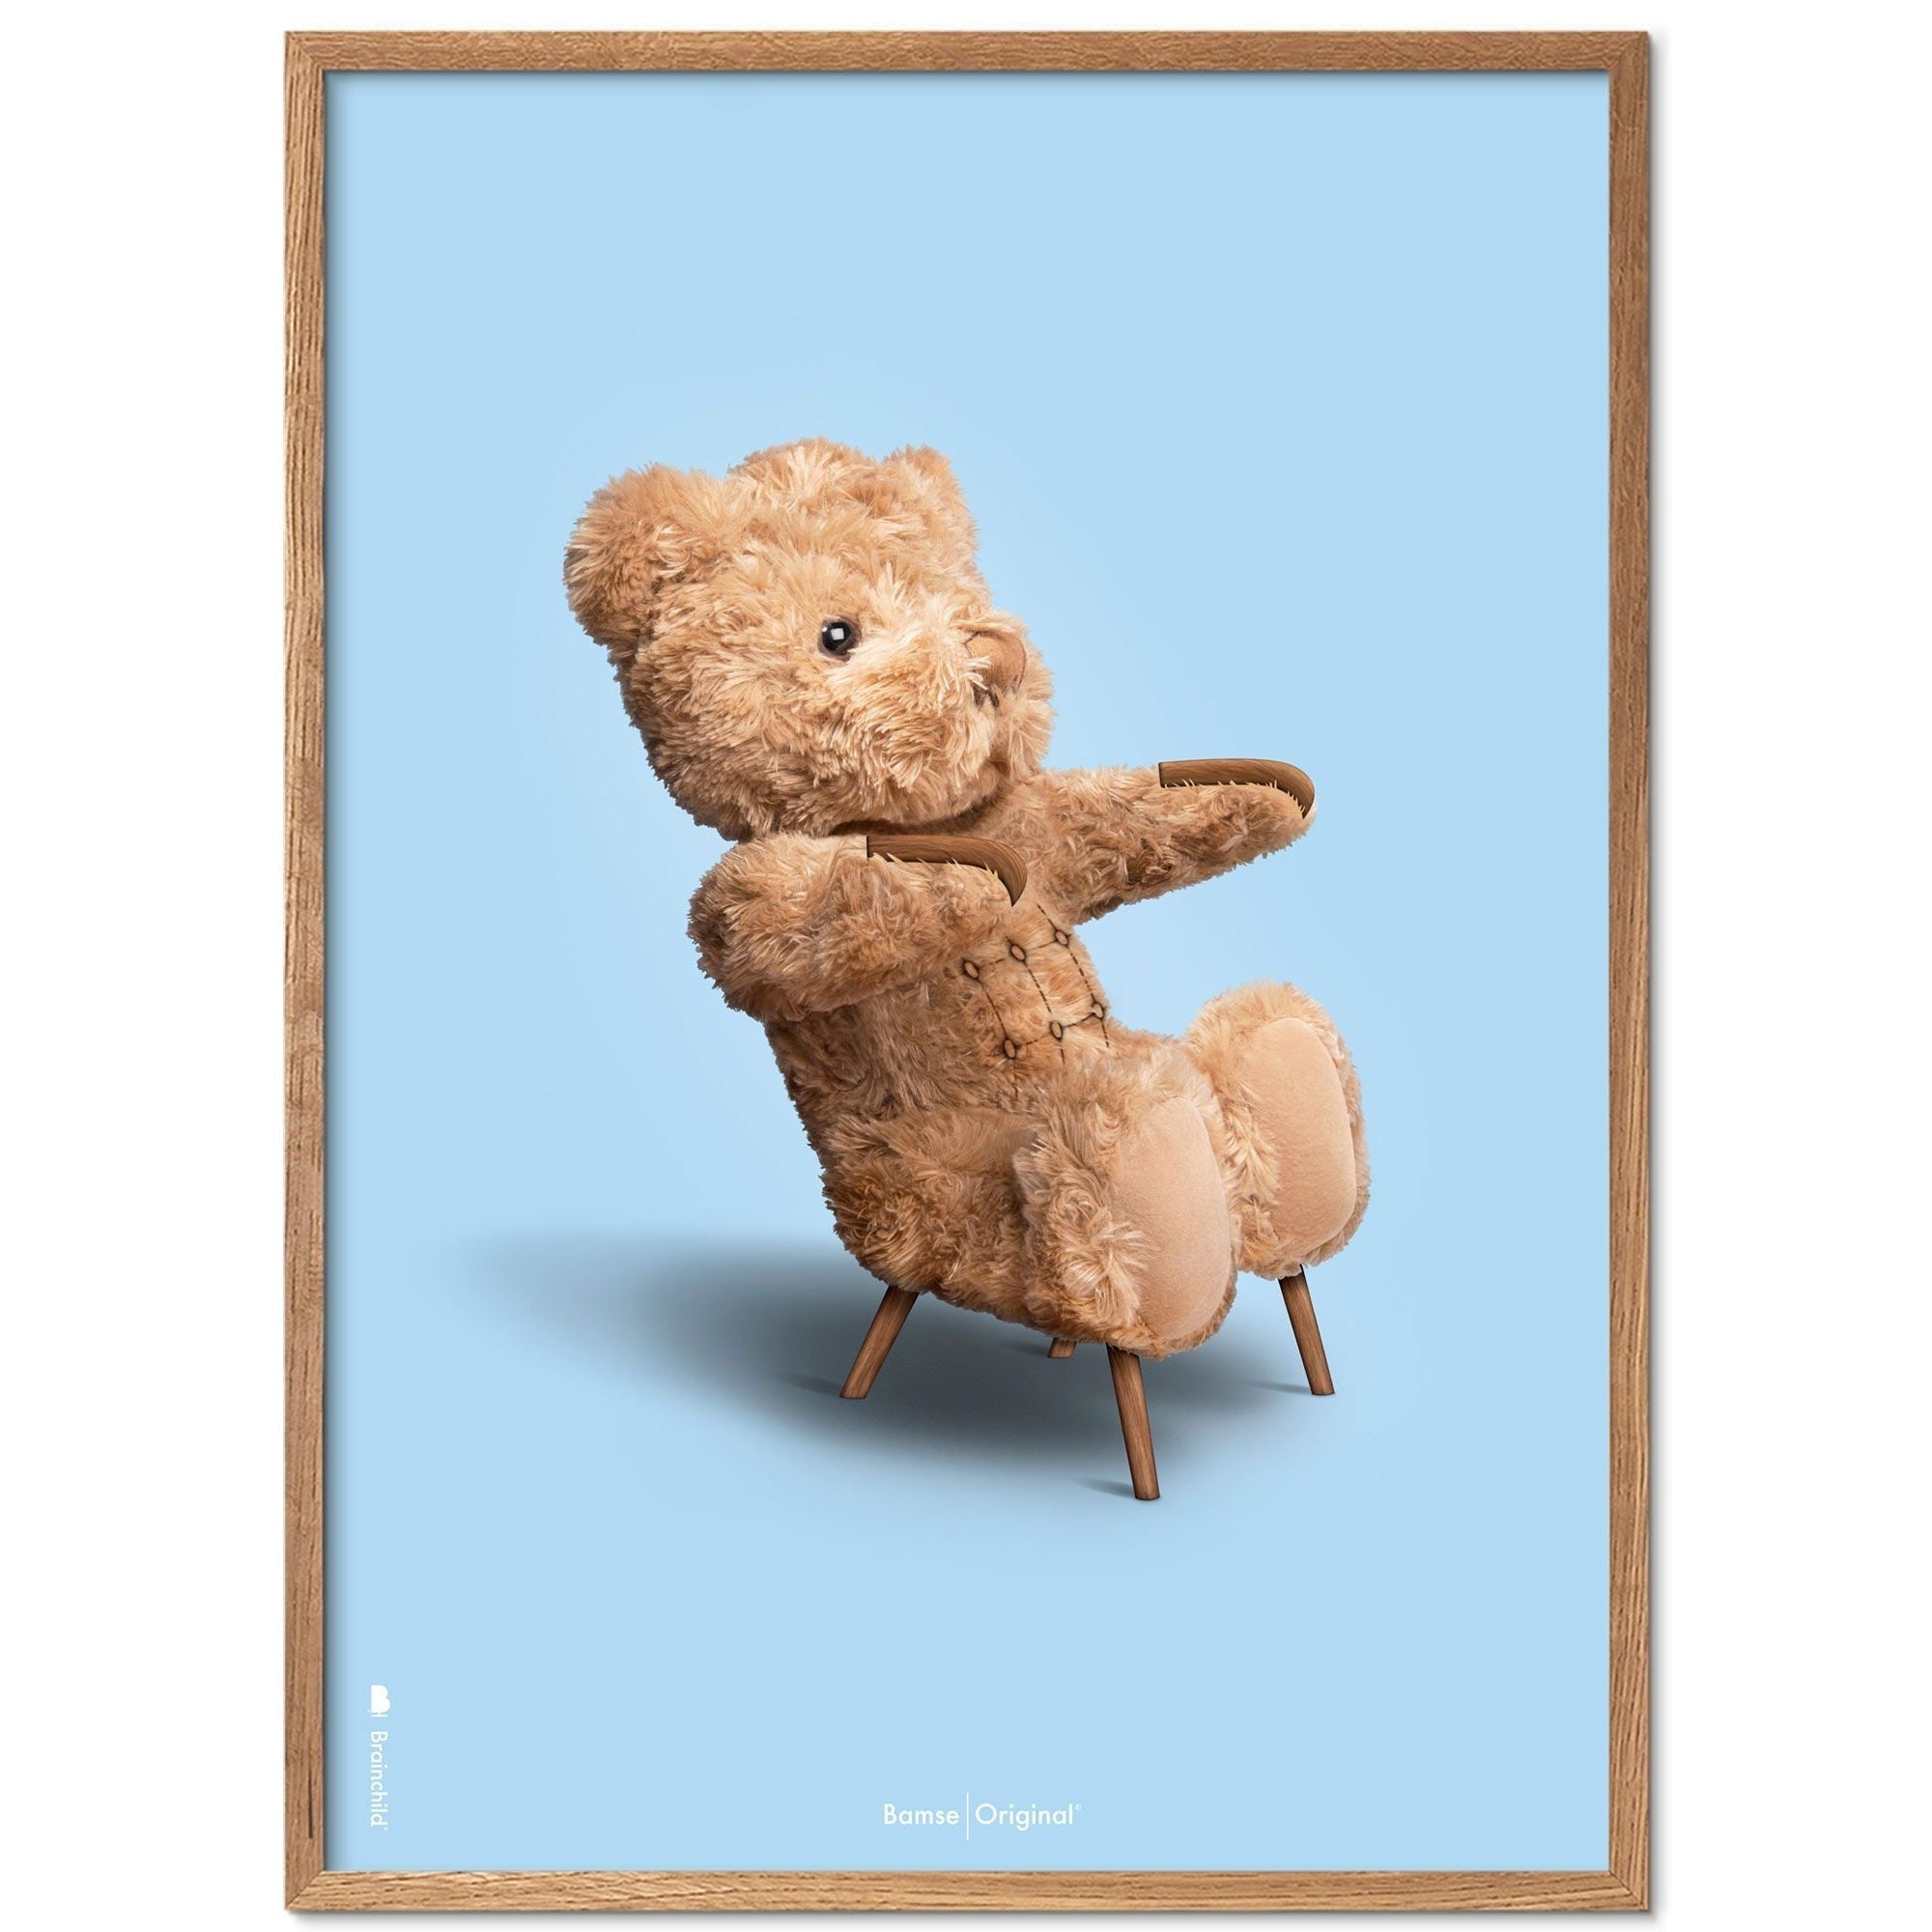 Brainchild Nallebjörn klassisk affischram gjord av lätt trä ramme 50x70 cm, ljusblå bakgrund